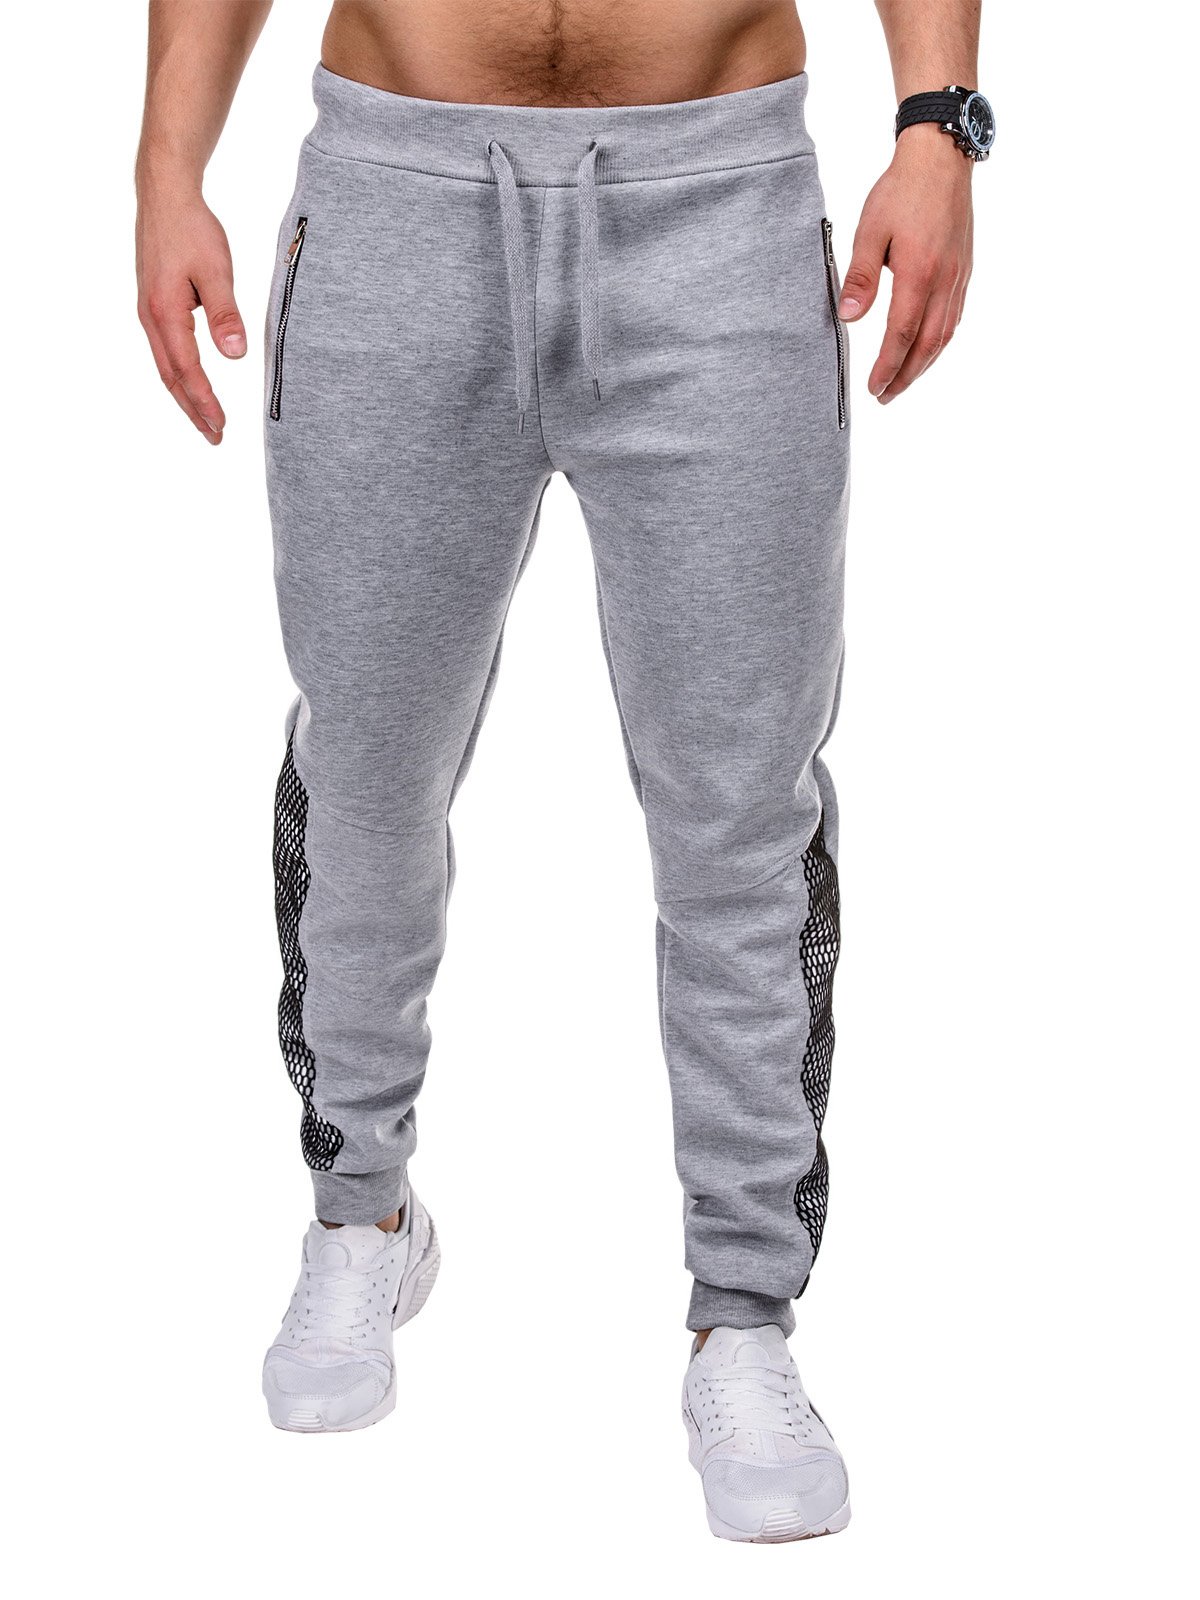 Pants - grey P437  - Men's clothing online